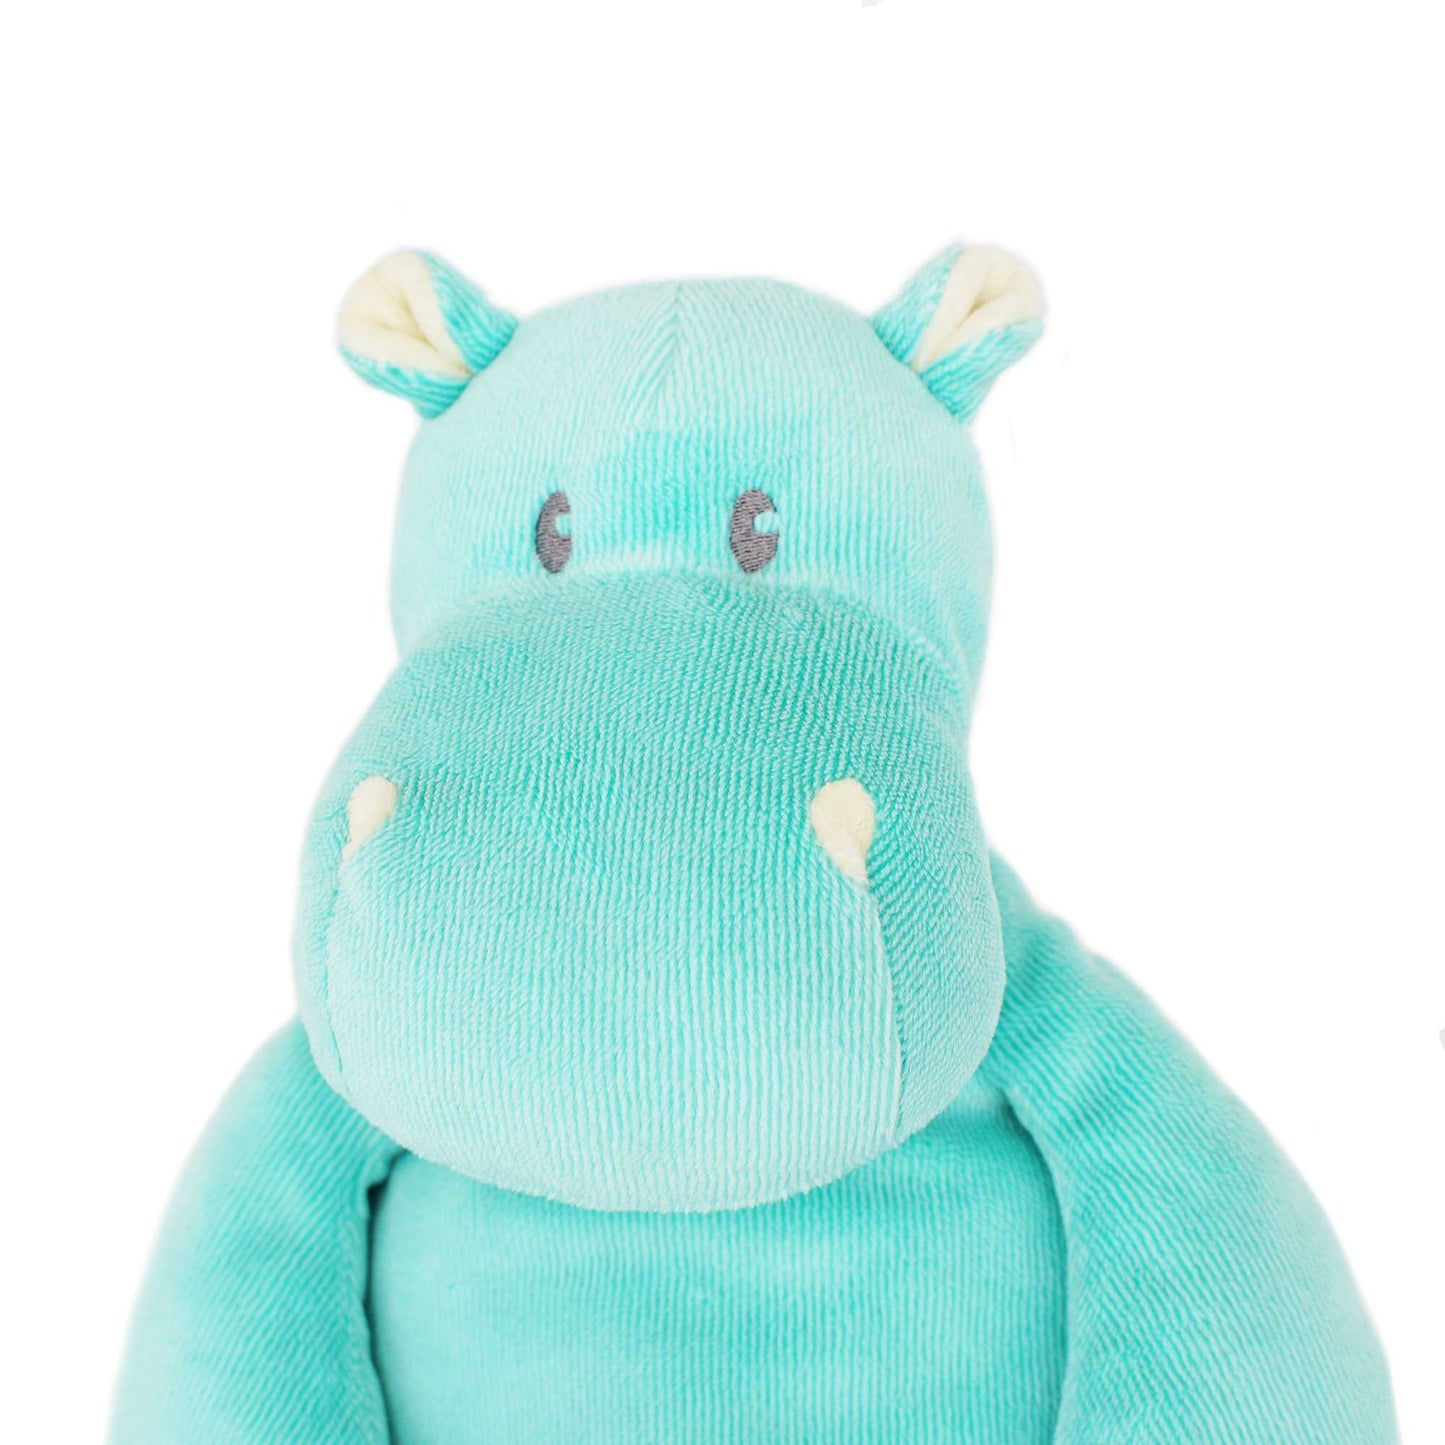 the face of a Chubby Hippo Stuffed Animal